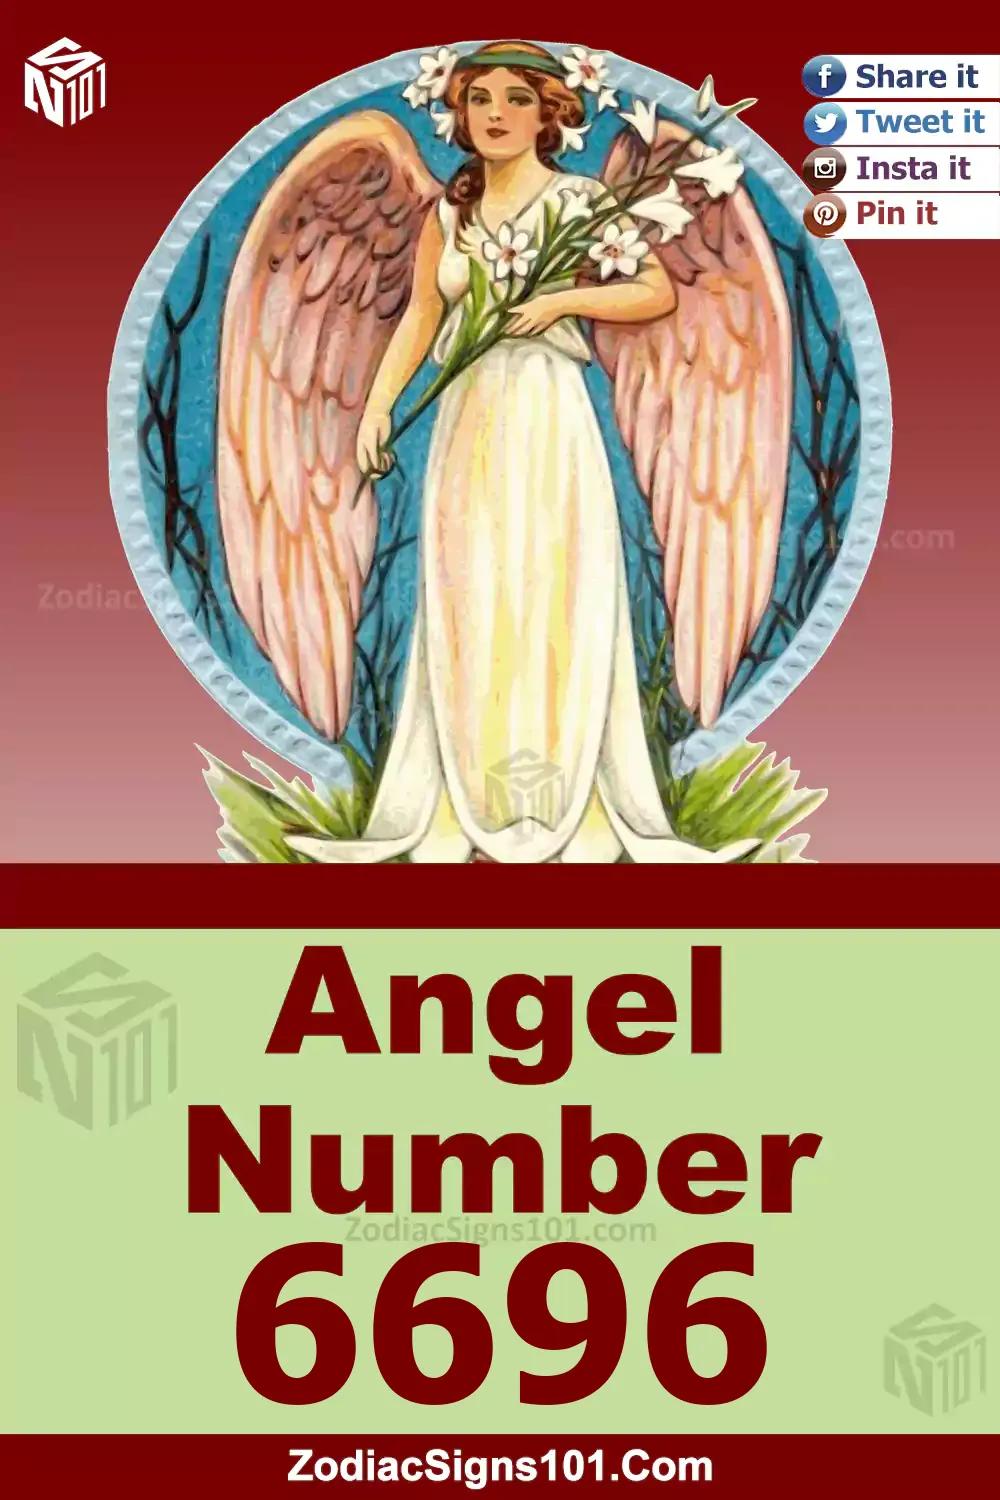 6696-Angel-Number-Meaning.jpg